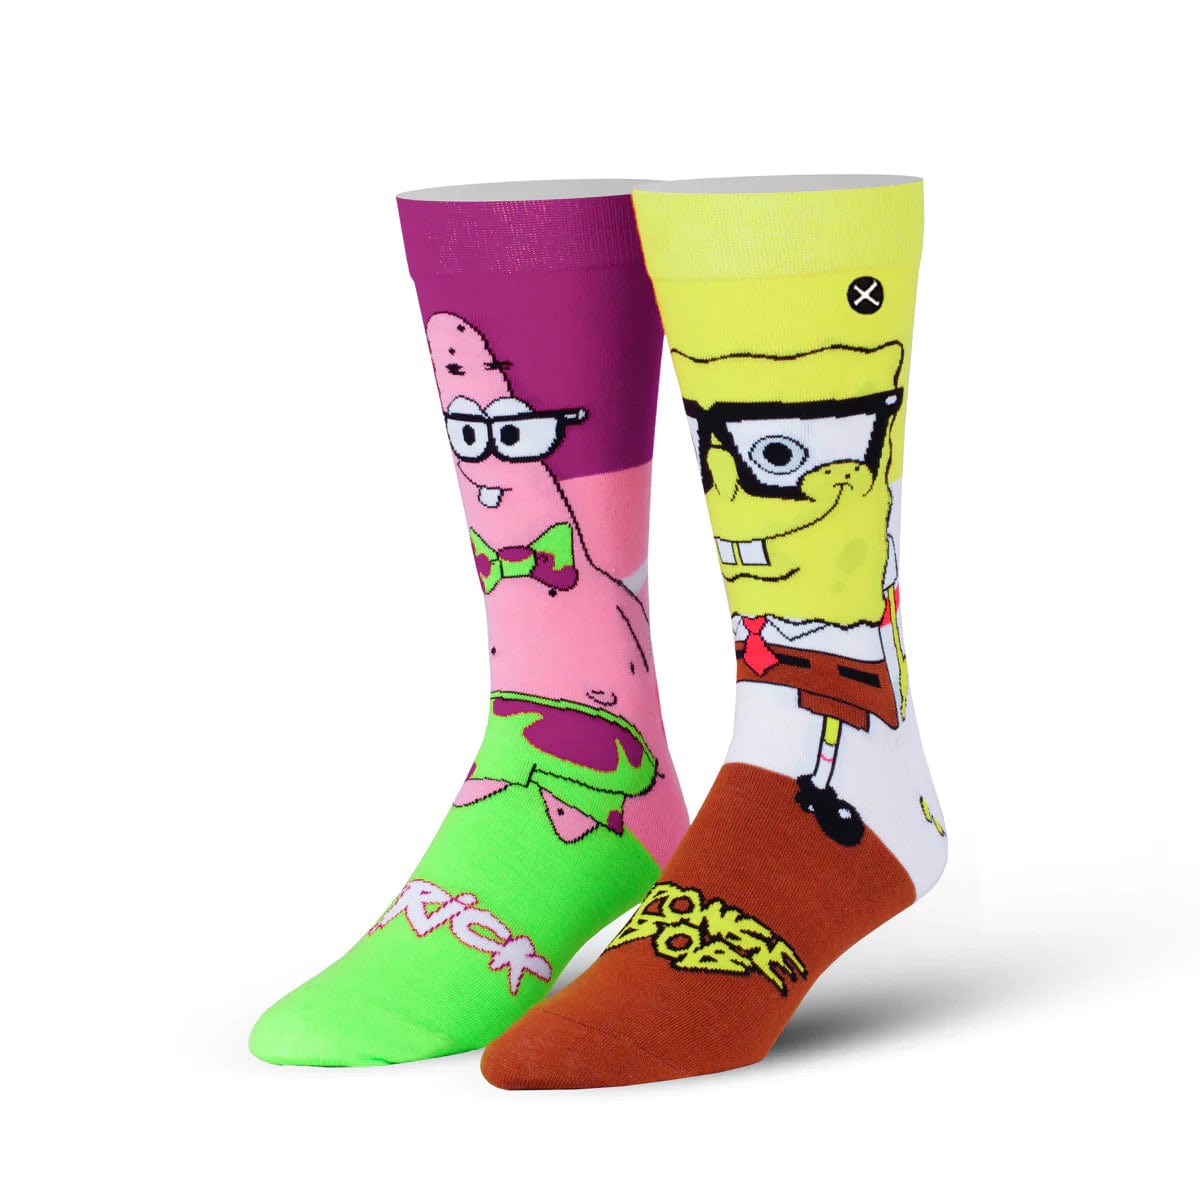 Odd Sox Spongebob Nerd Pants Socks